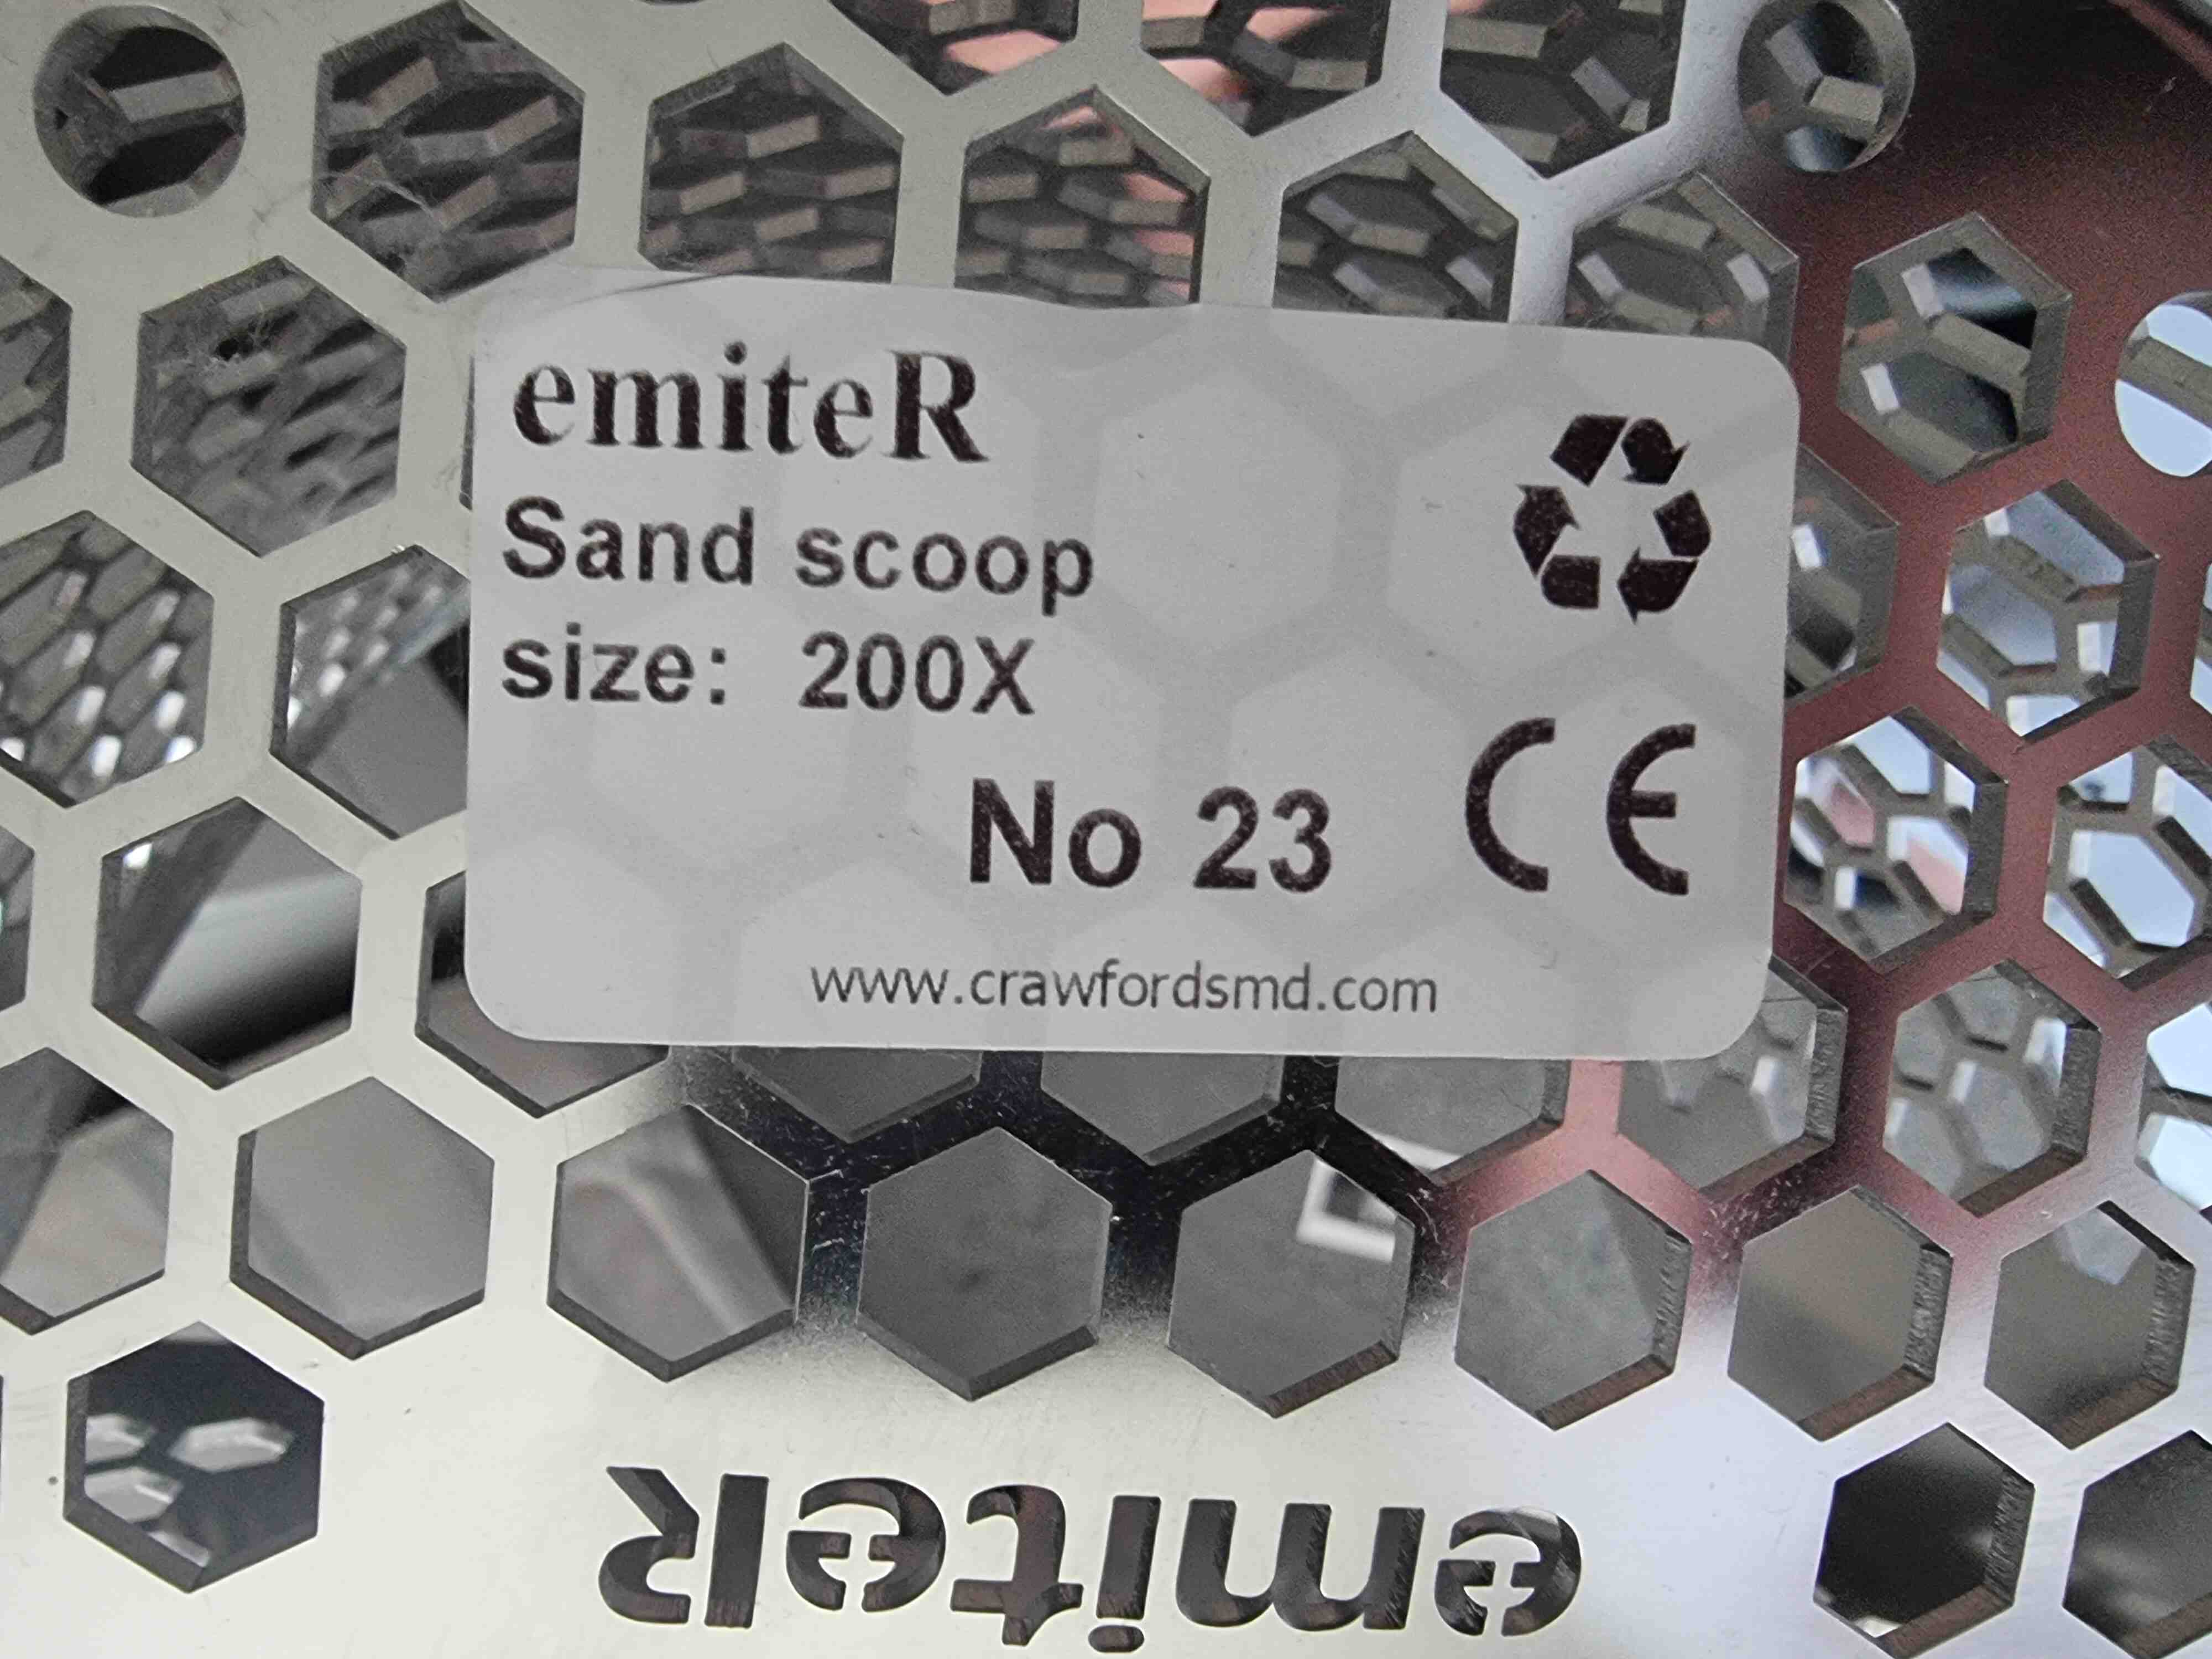 EmiteR 200x sand scoop for sale